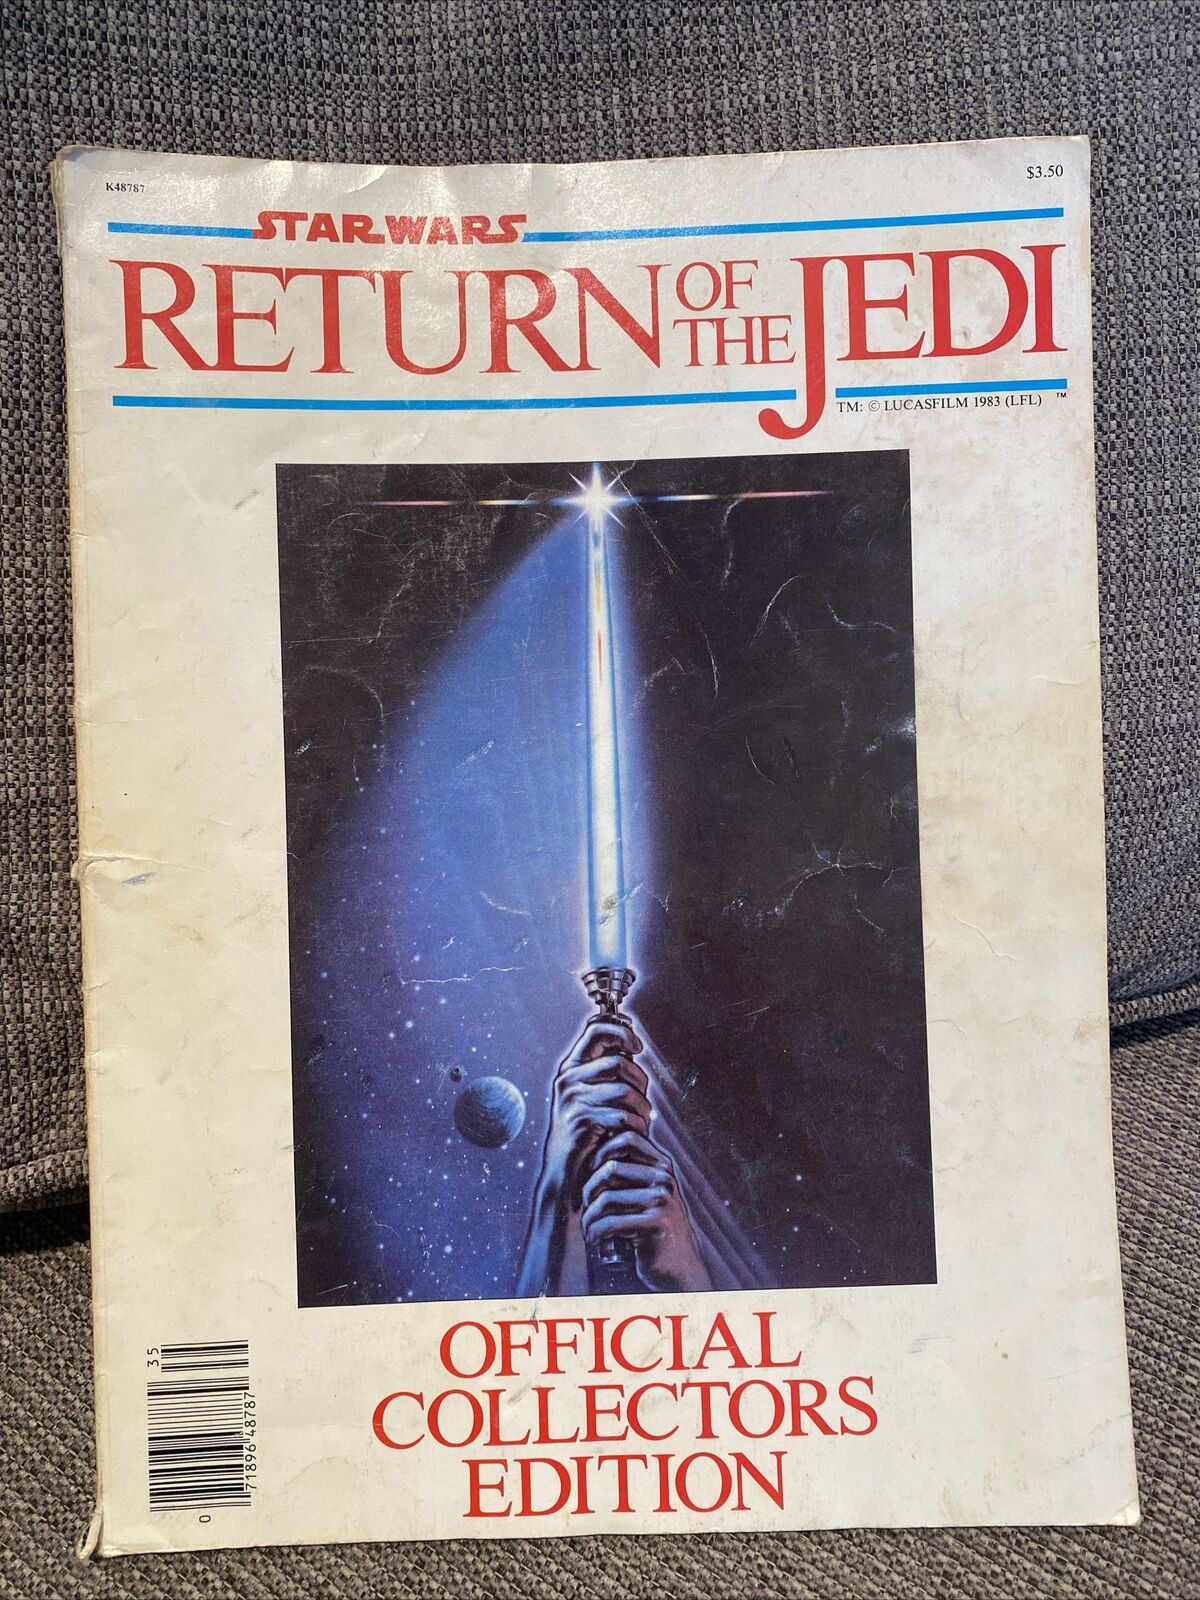 Original Vintage 1983 Star Wars Return Of The Jedi Official Collectors Edition